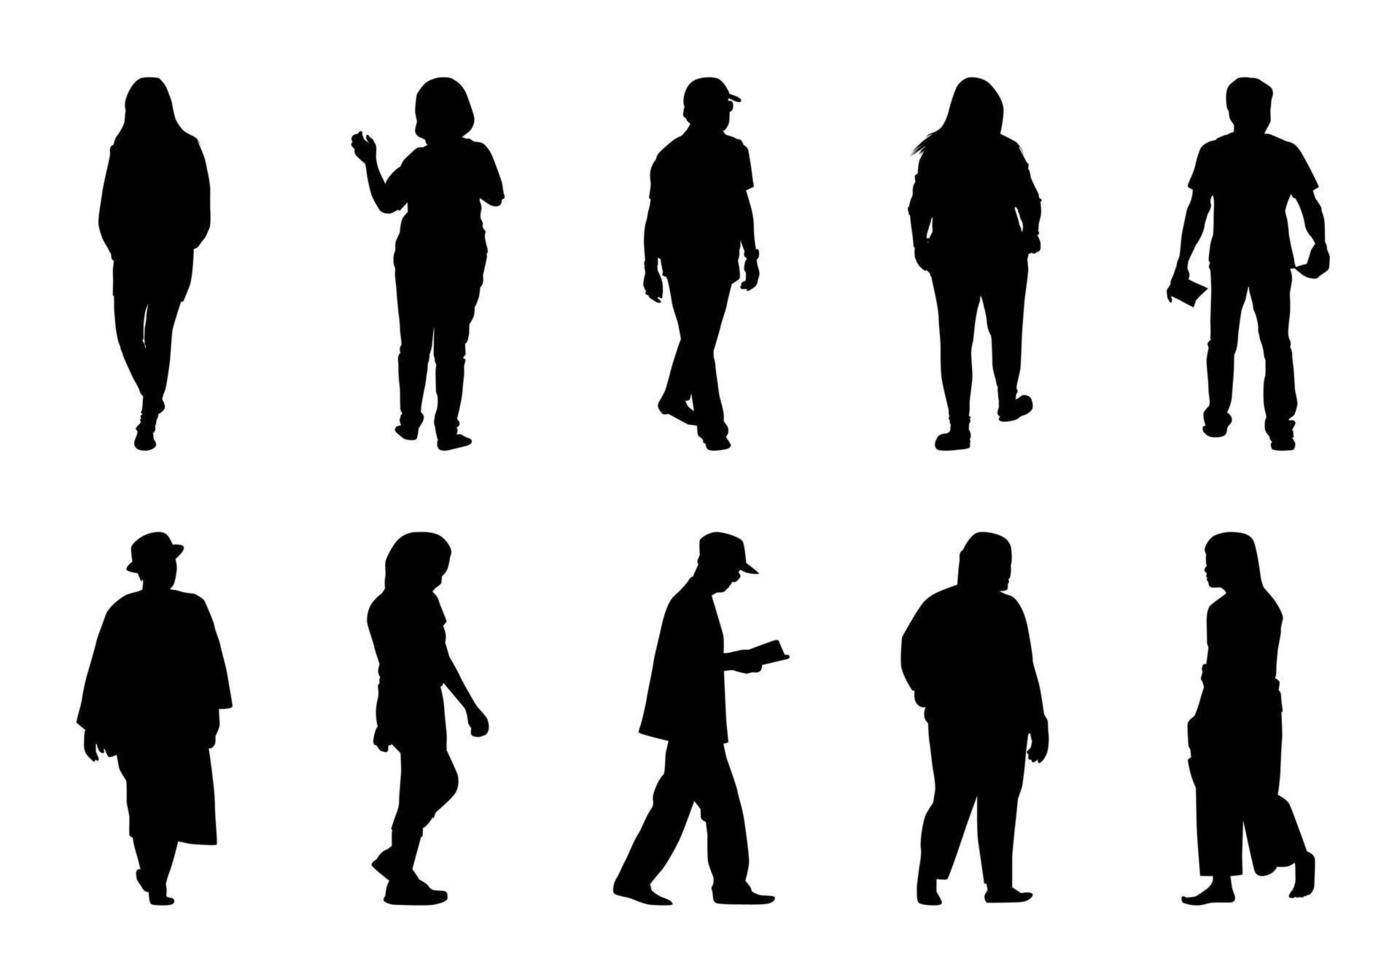 mensen silhouet lopen op witte achtergrond, zwarte mannen en vrouwen vector set